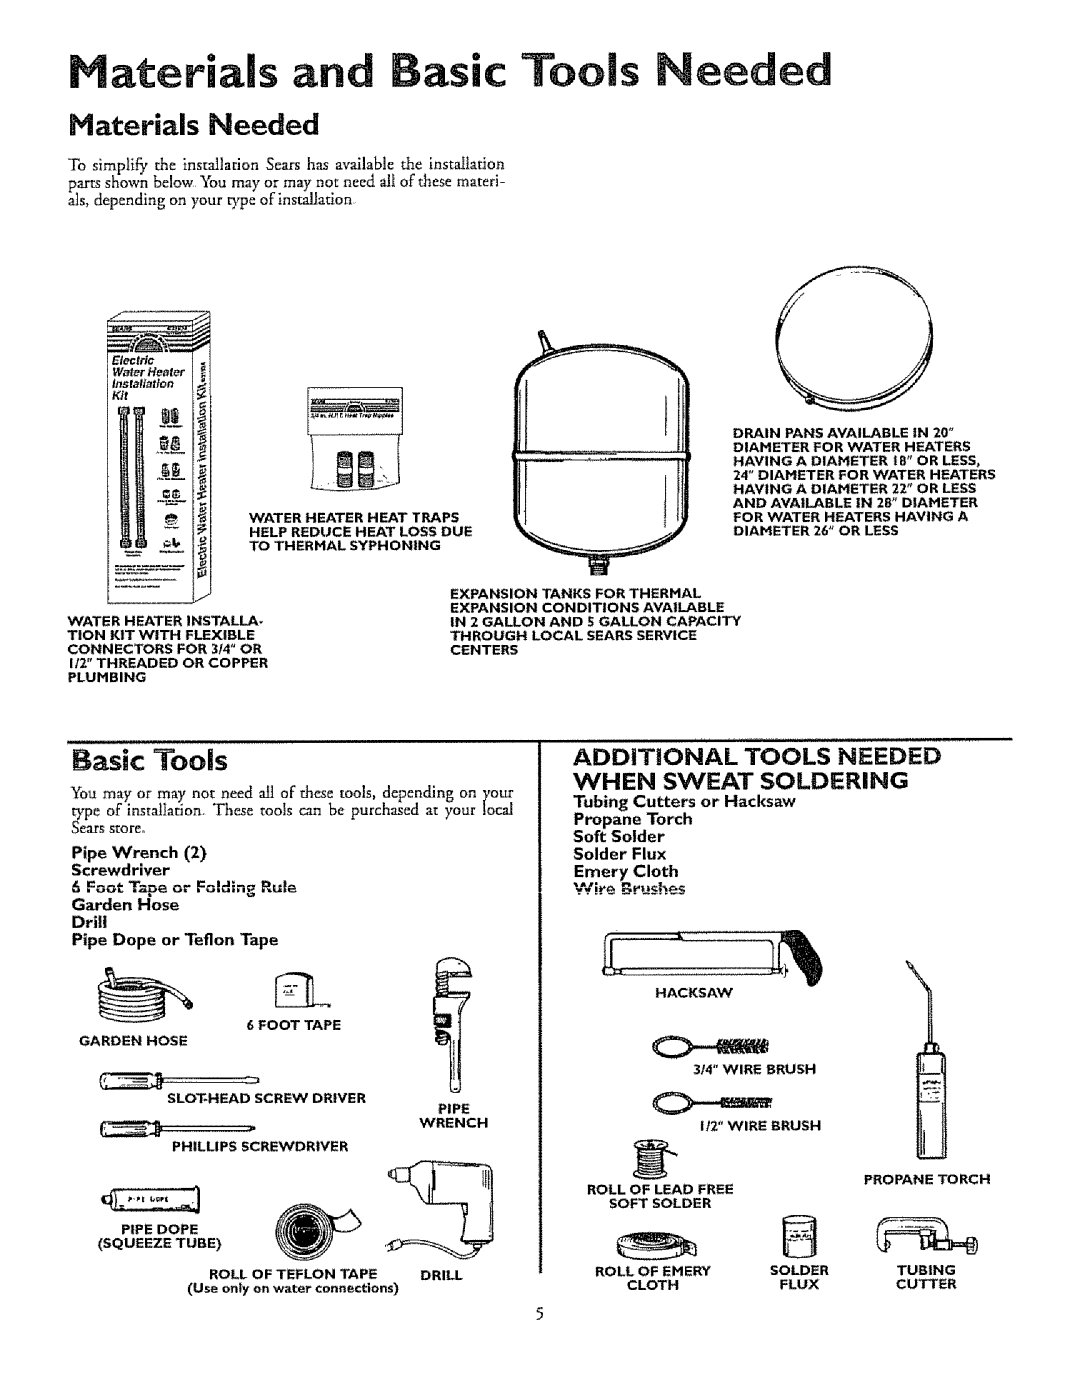 Kenmore 153327166 30 GAI SHORT Materials an Basic Tools eeded, Materials Needed, Additional, Tools Needed, When, Sweat 